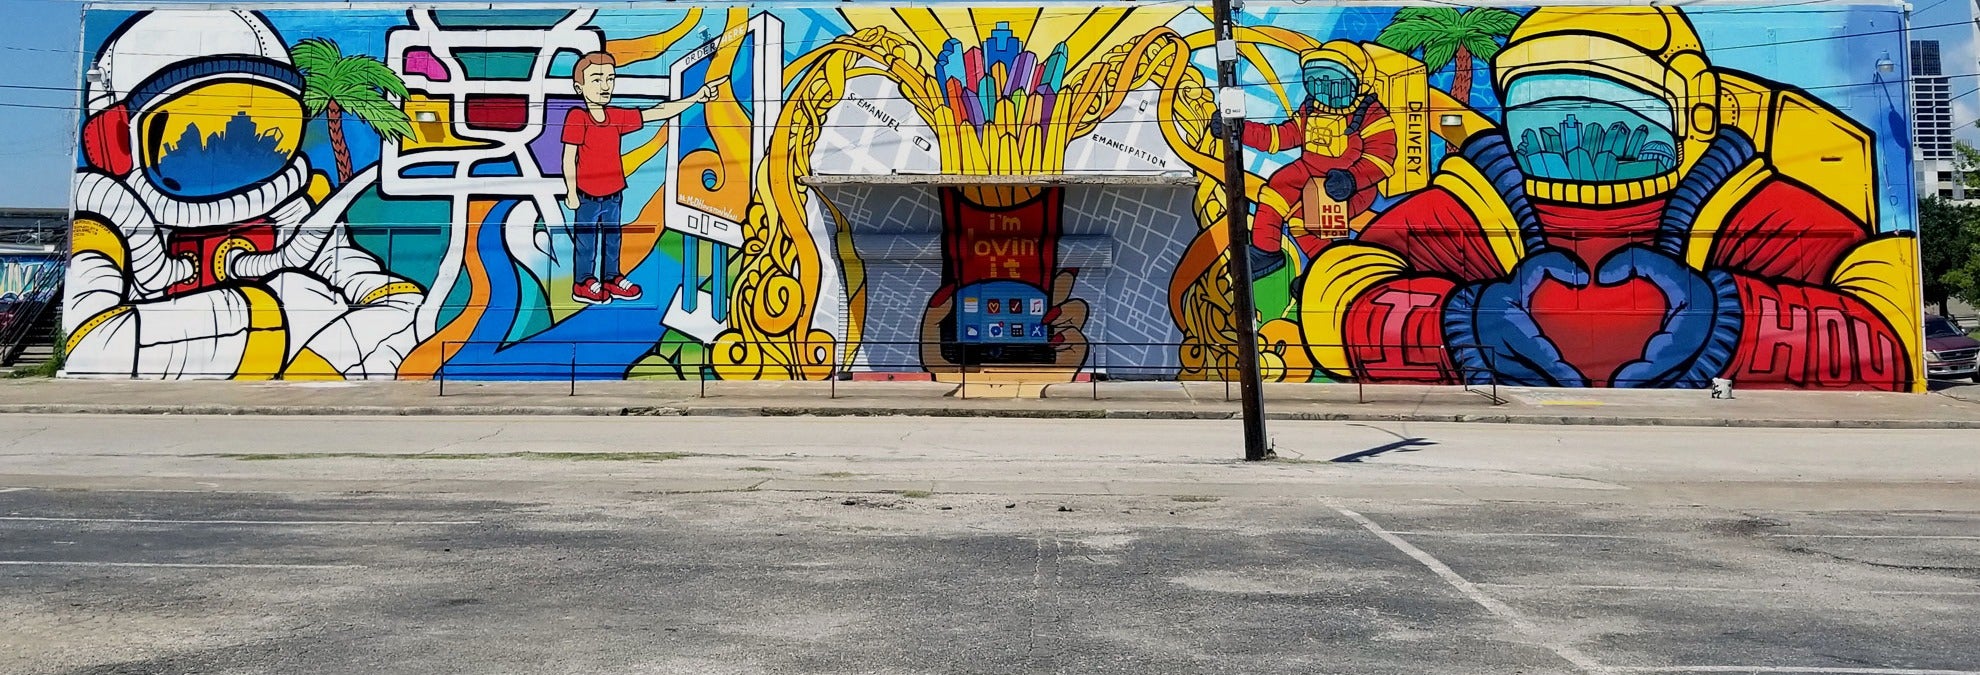 Tour de street art por Houston